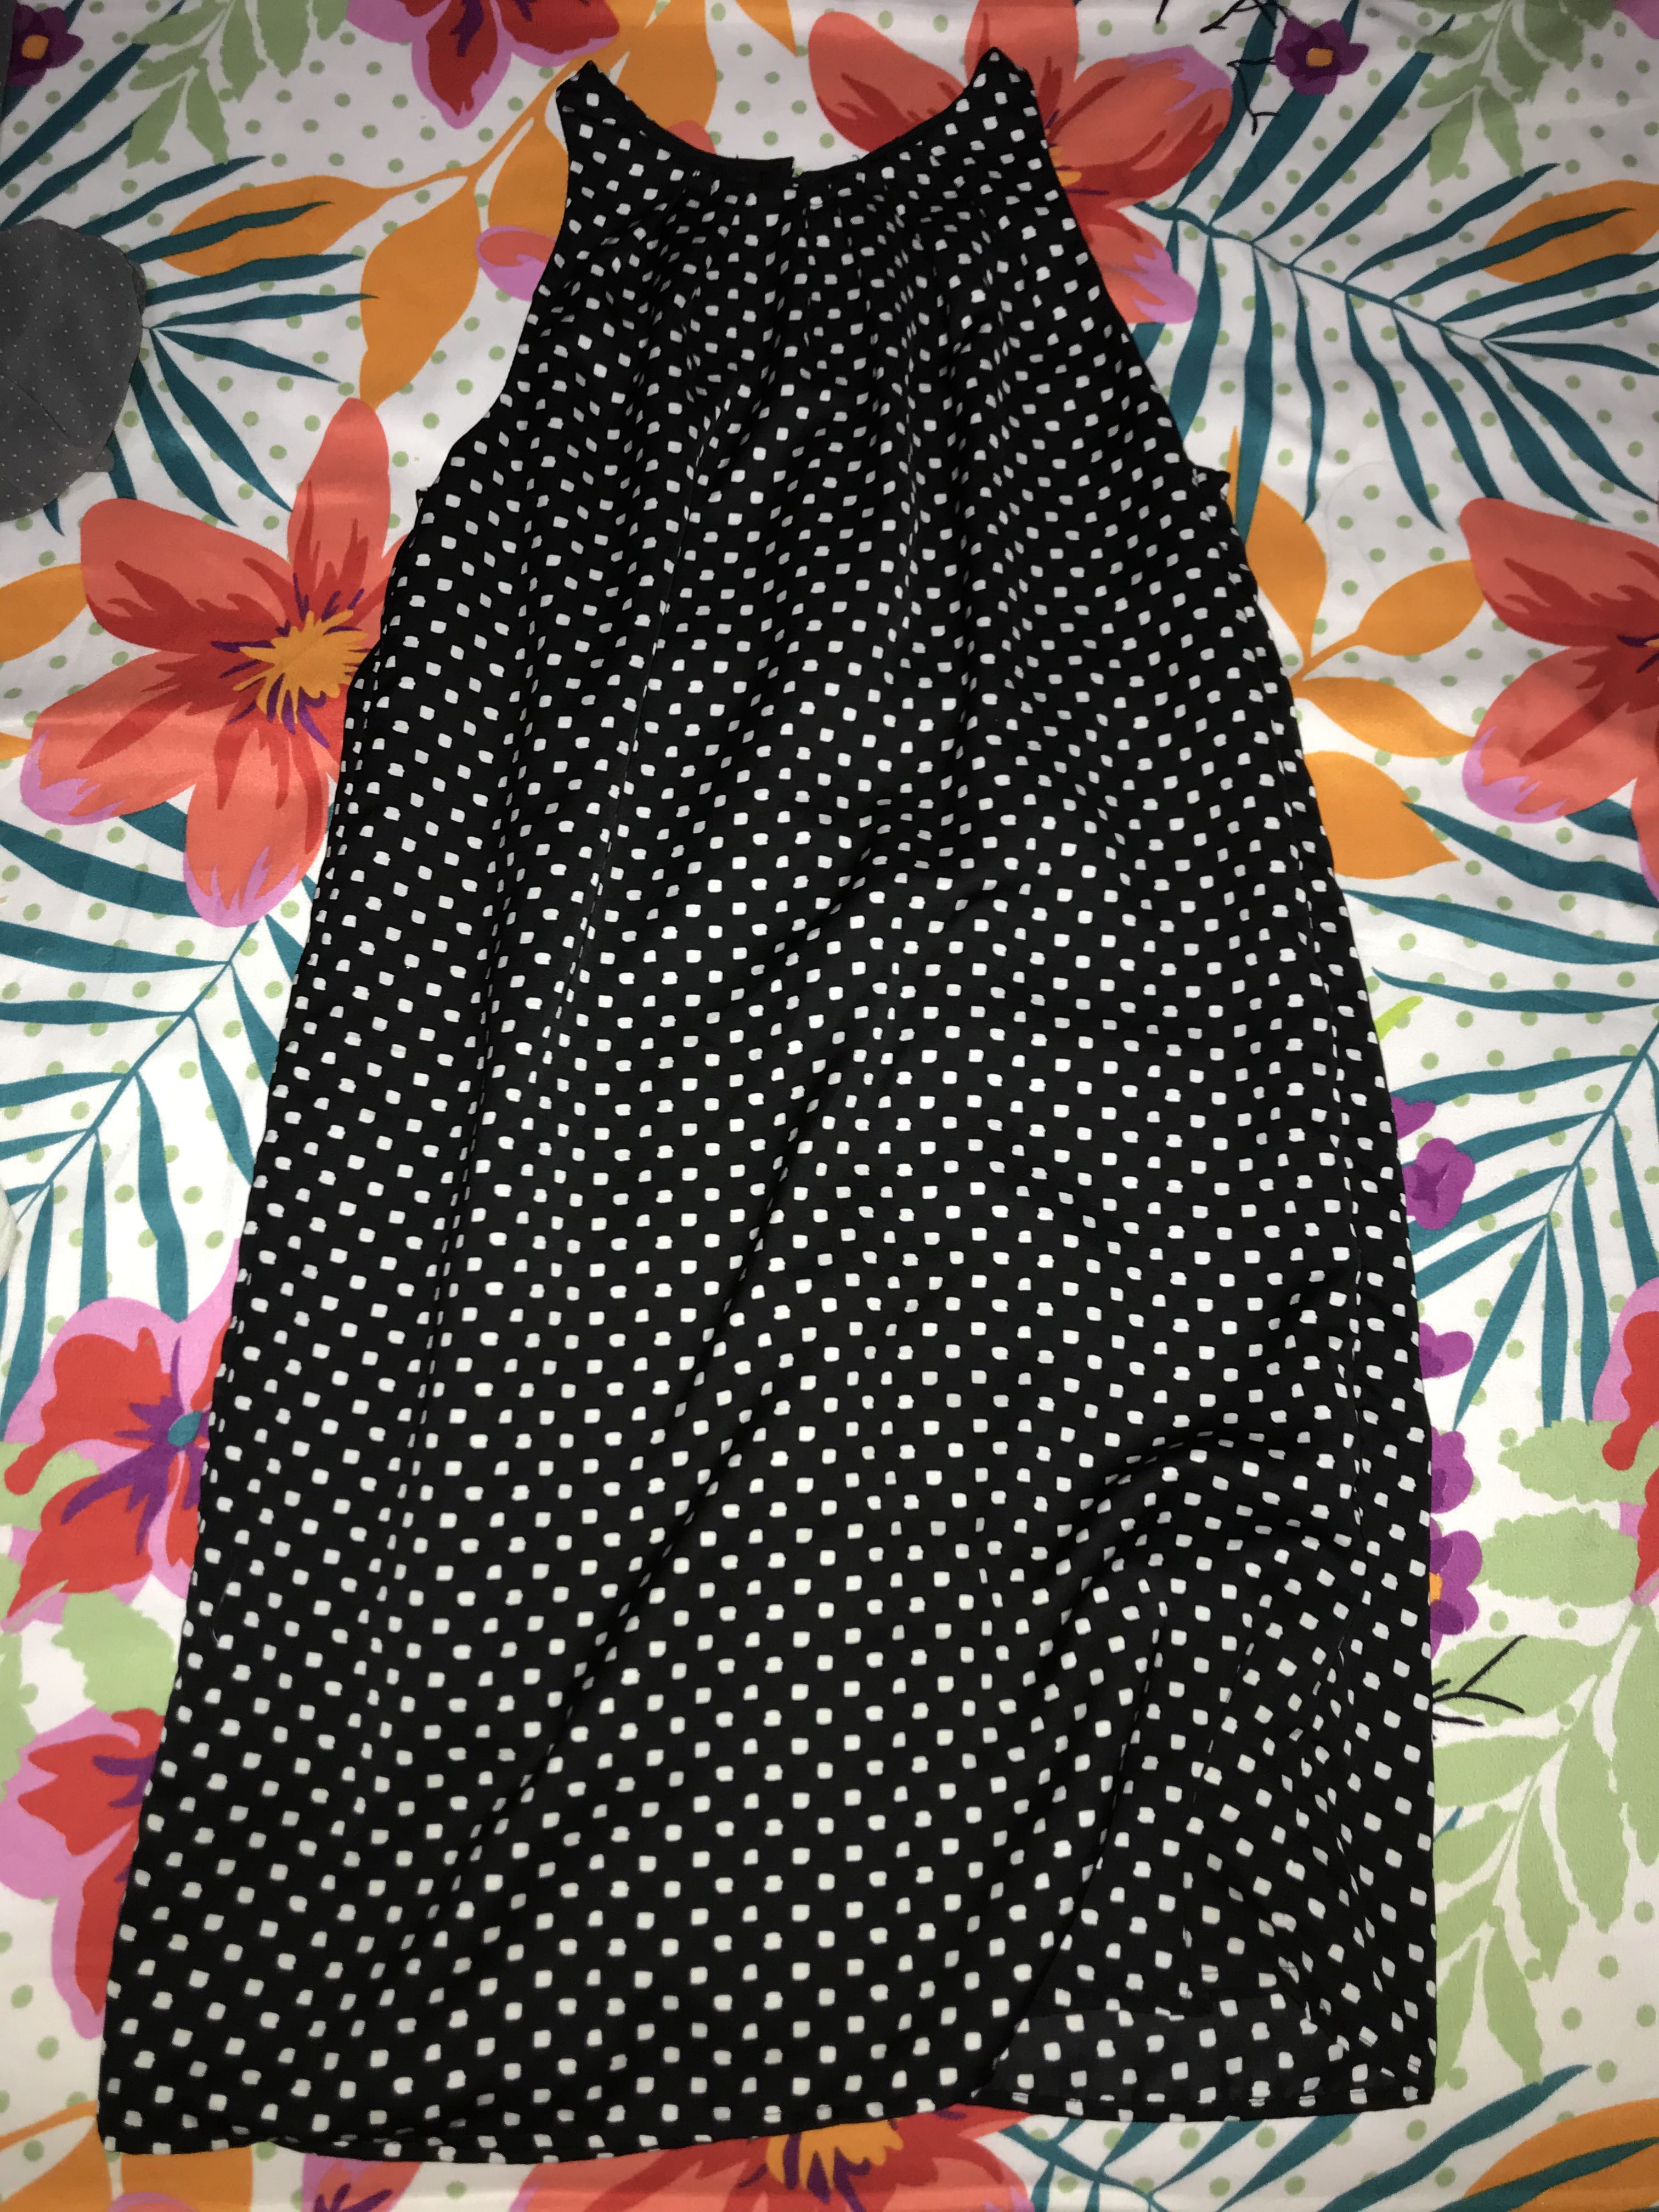 dress in dots